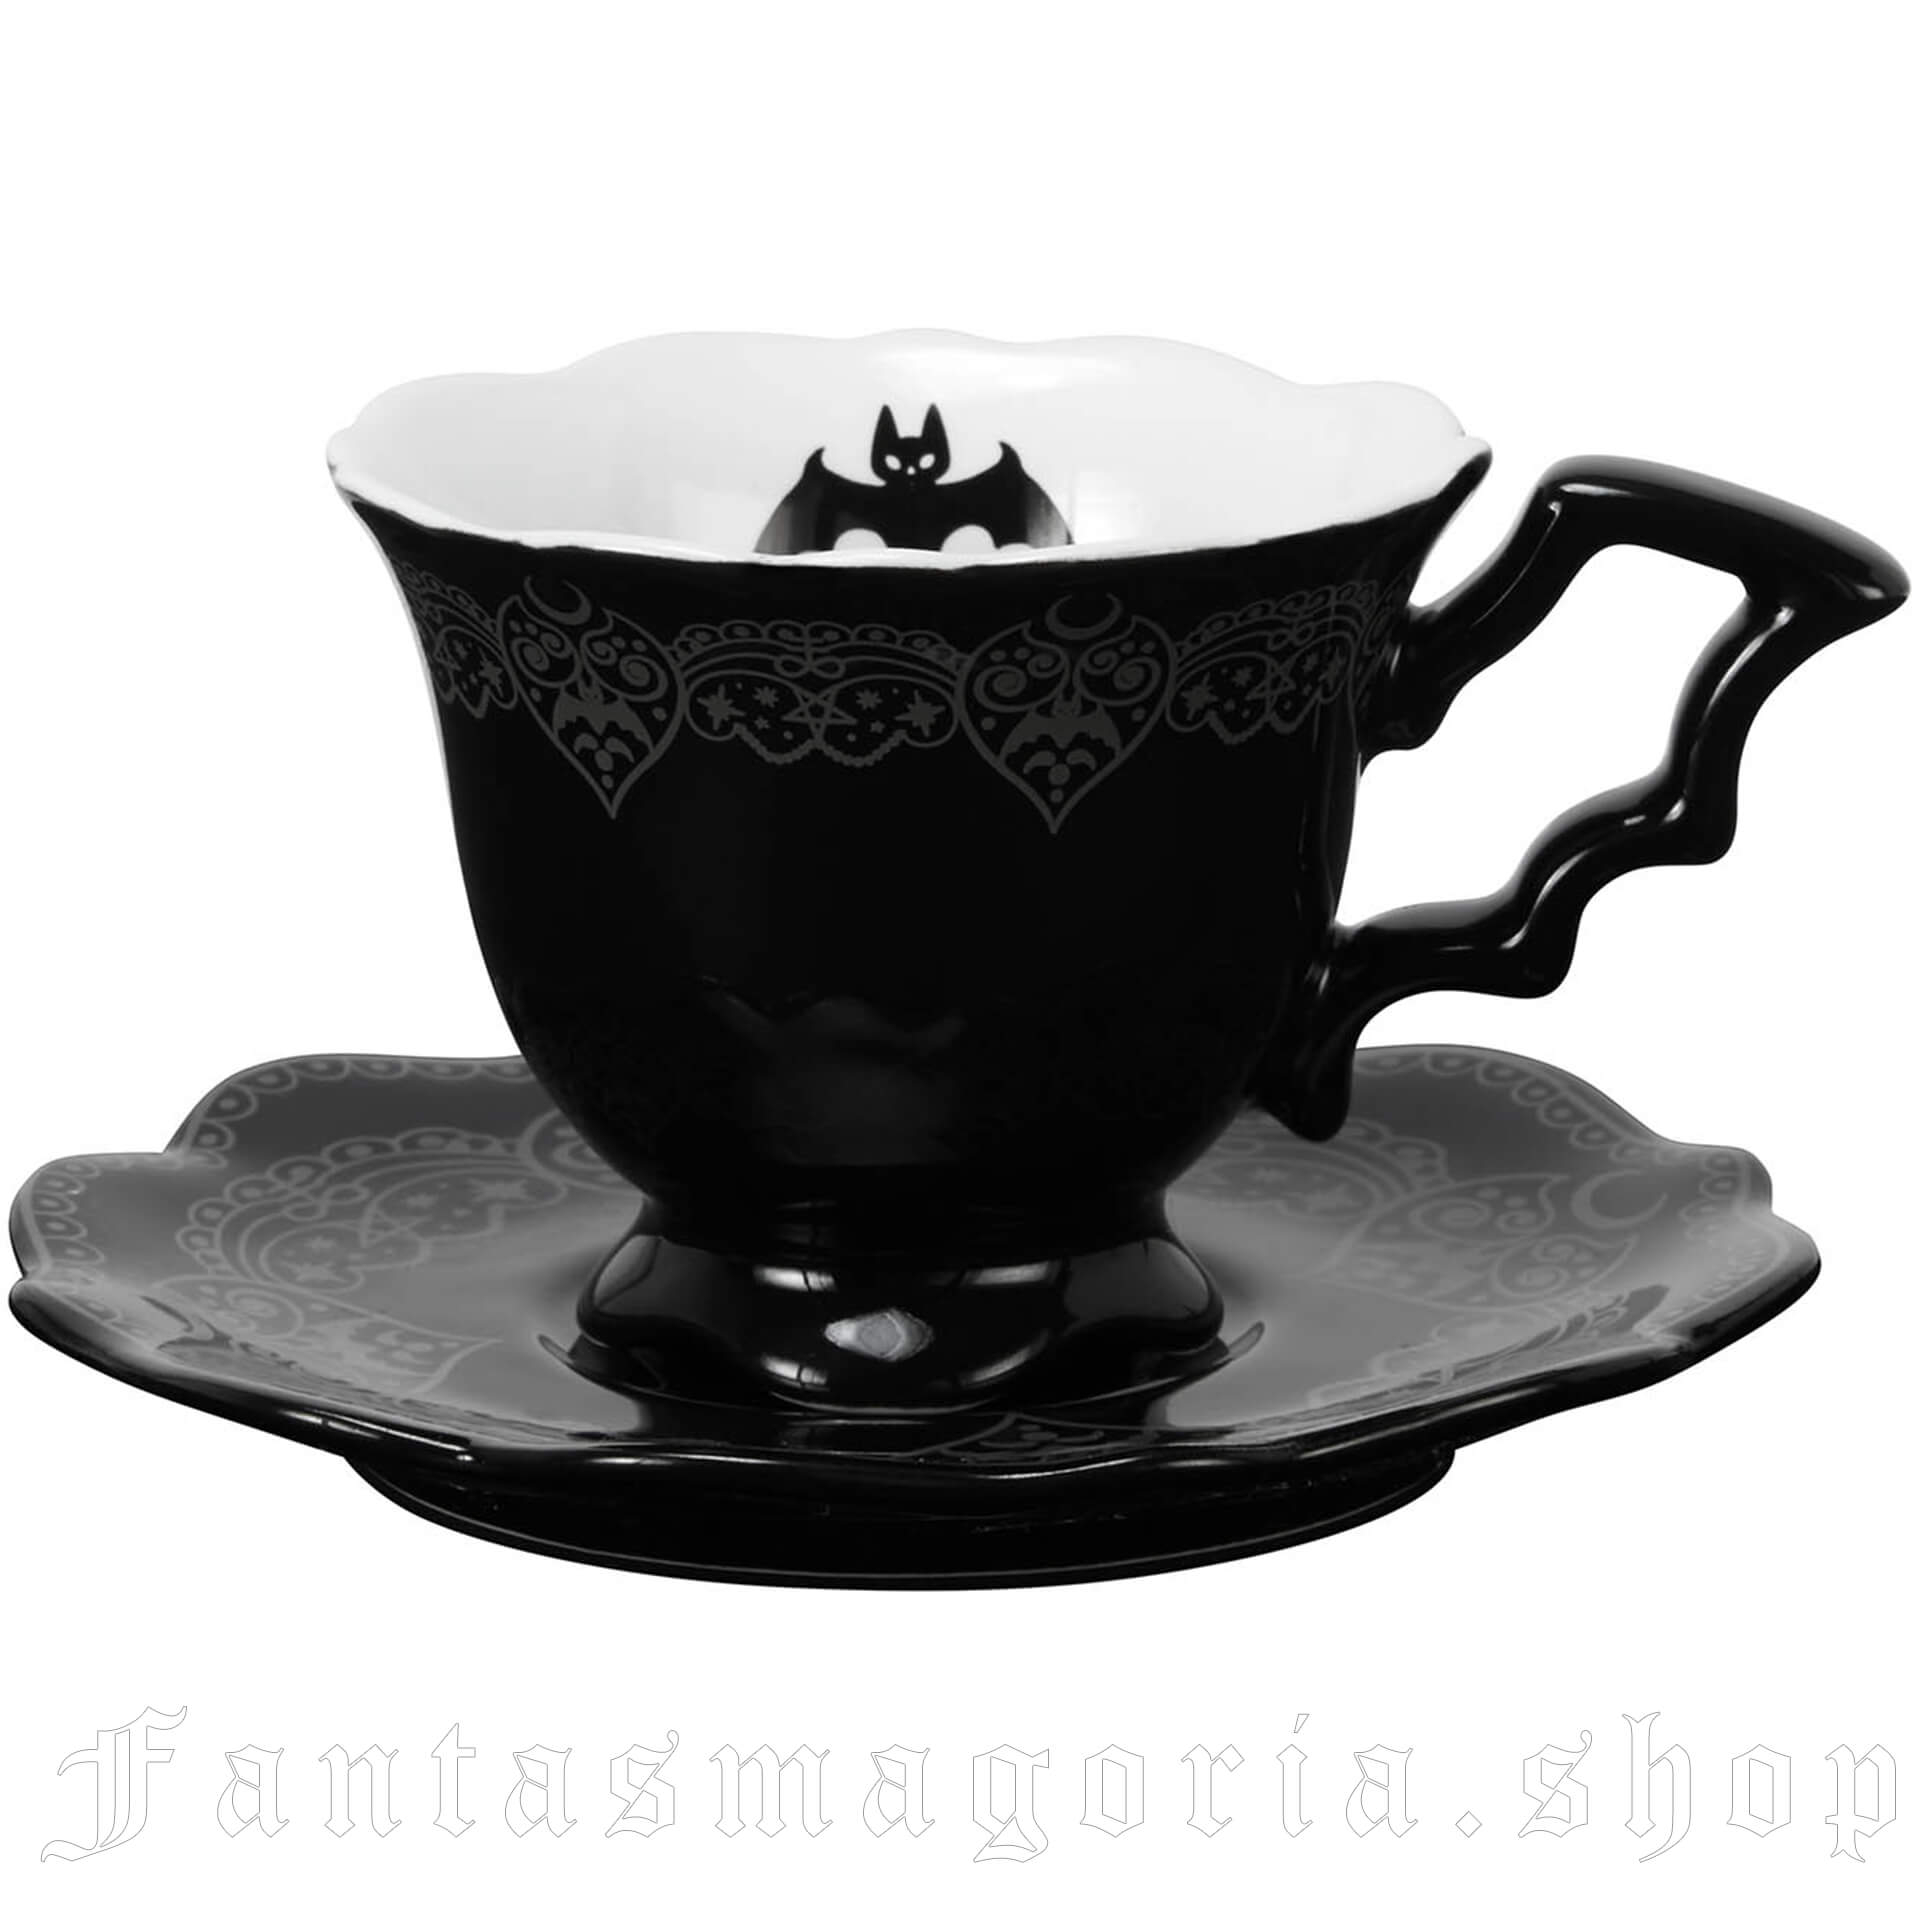 ACOTAR Inspired: Court of Nightmares & Dreams Tea Cup + Saucer